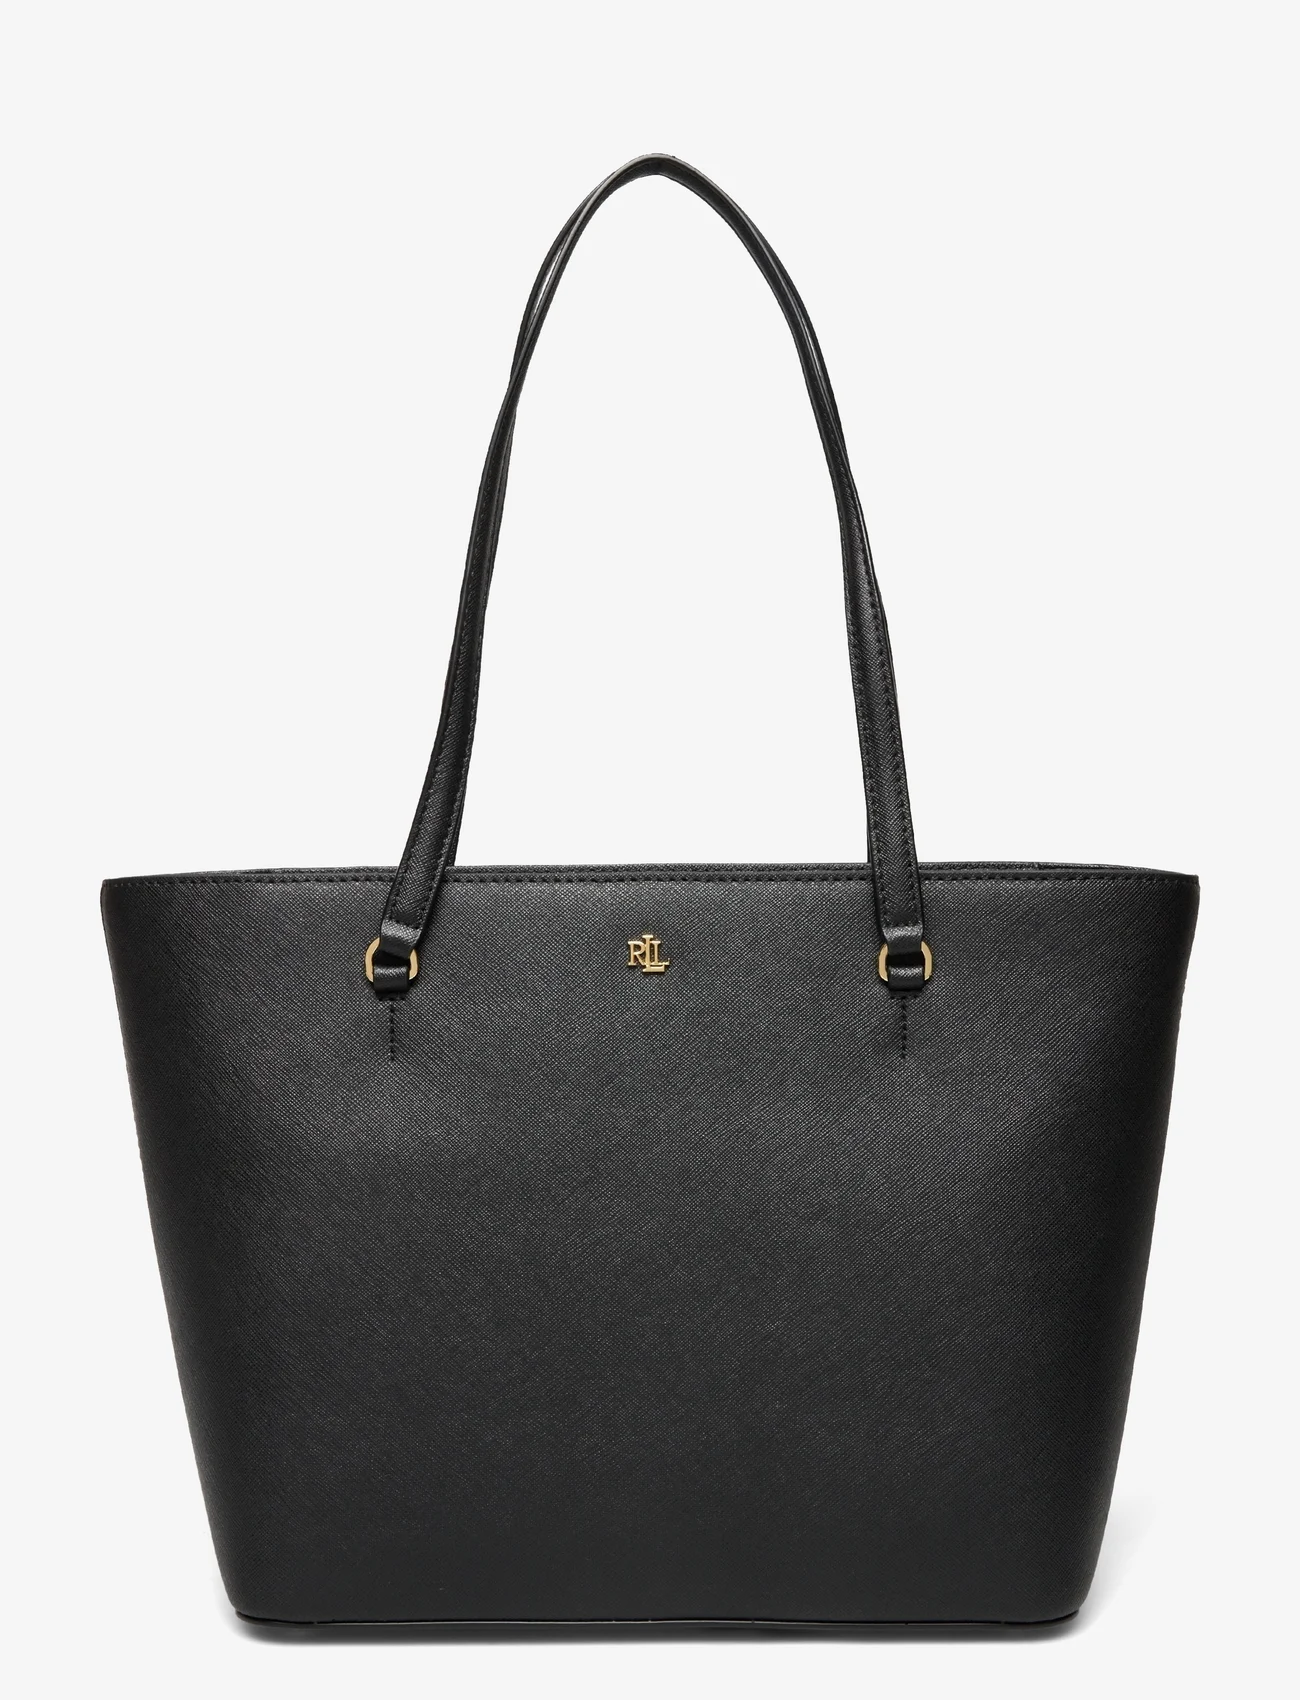 Lauren Ralph Lauren - Crosshatch Leather Medium Karly Tote - tote bags - black - 0